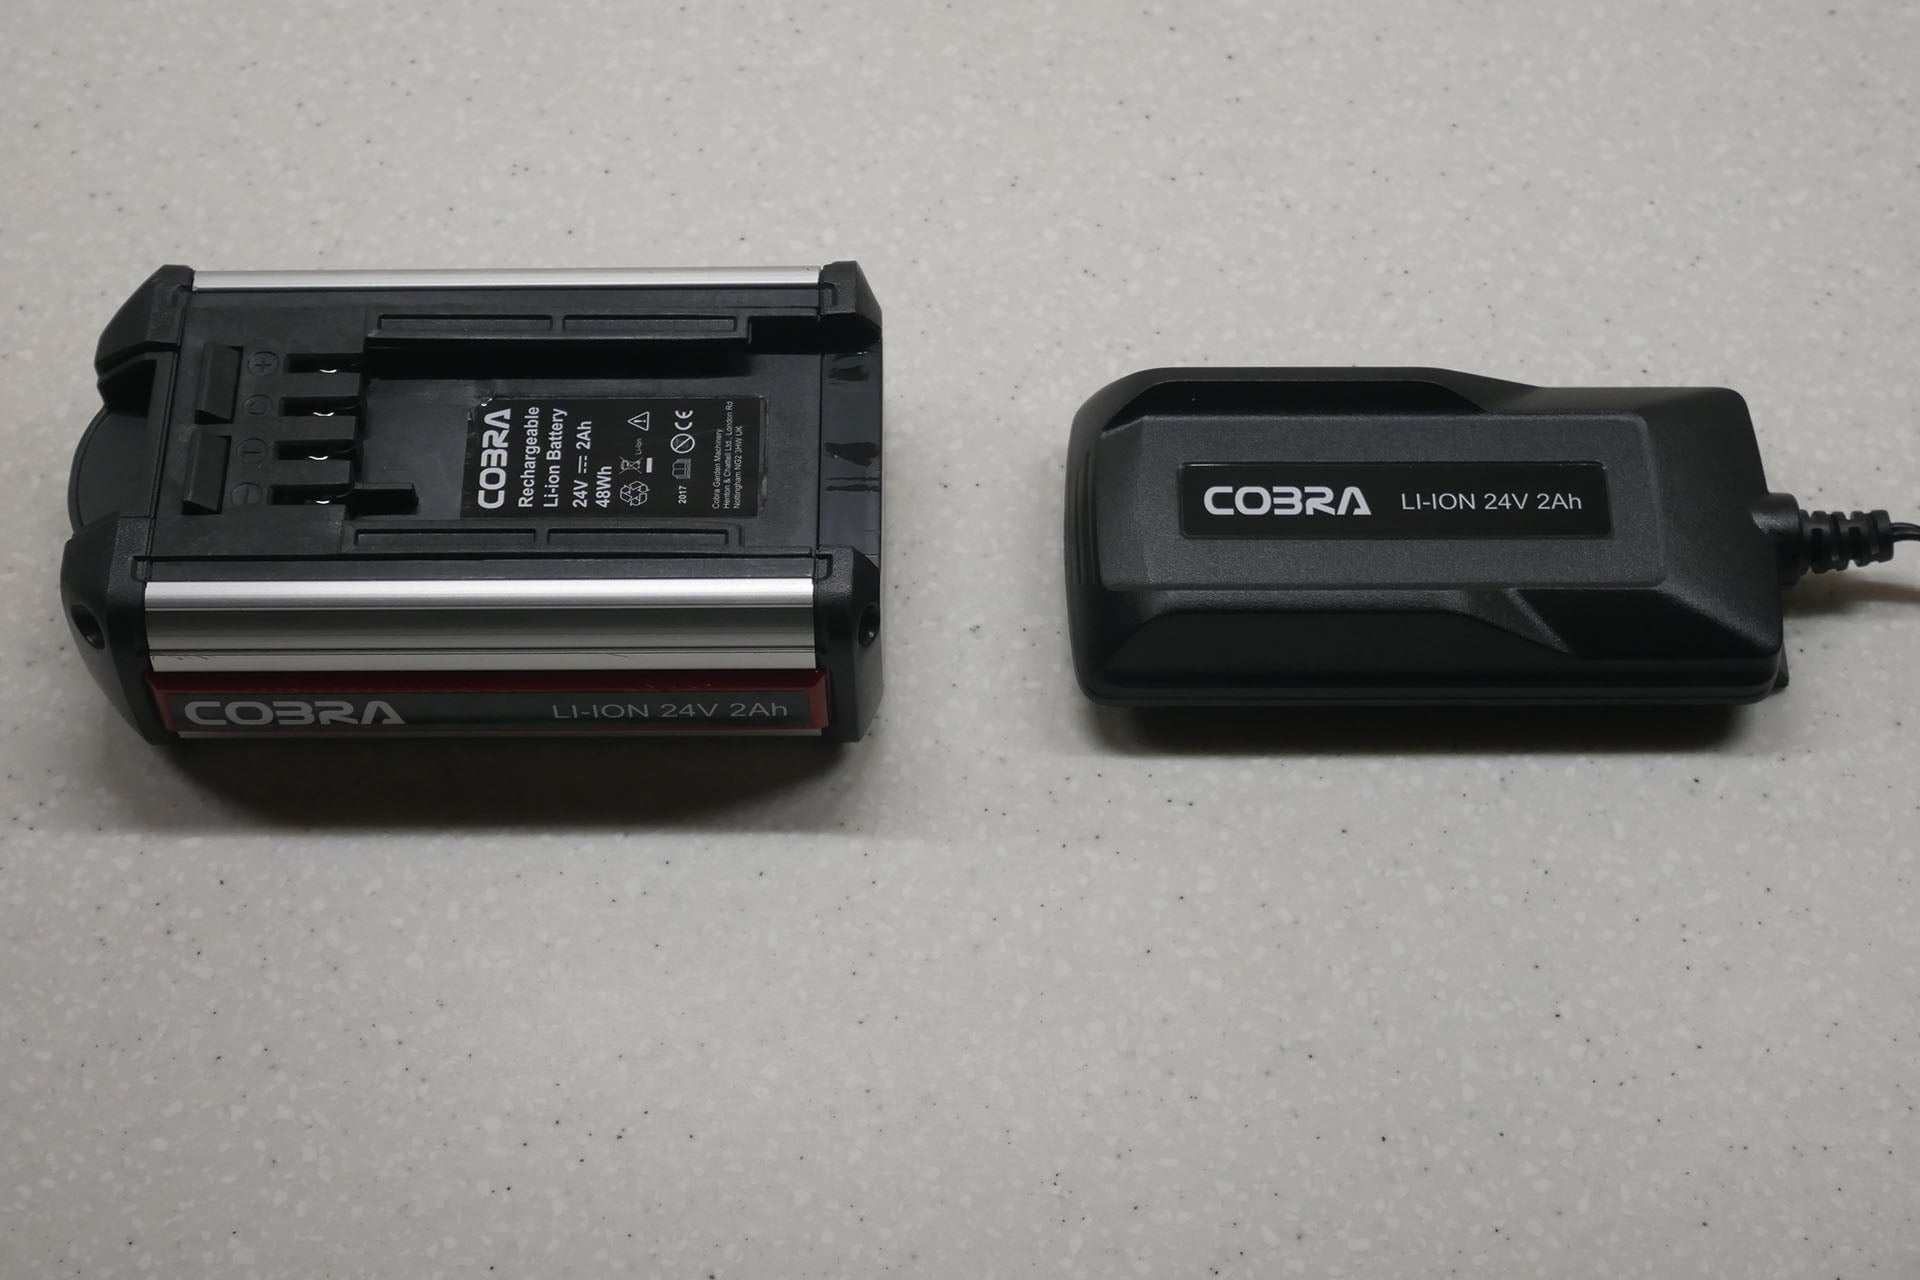 Cobra BV6524V battery and charger